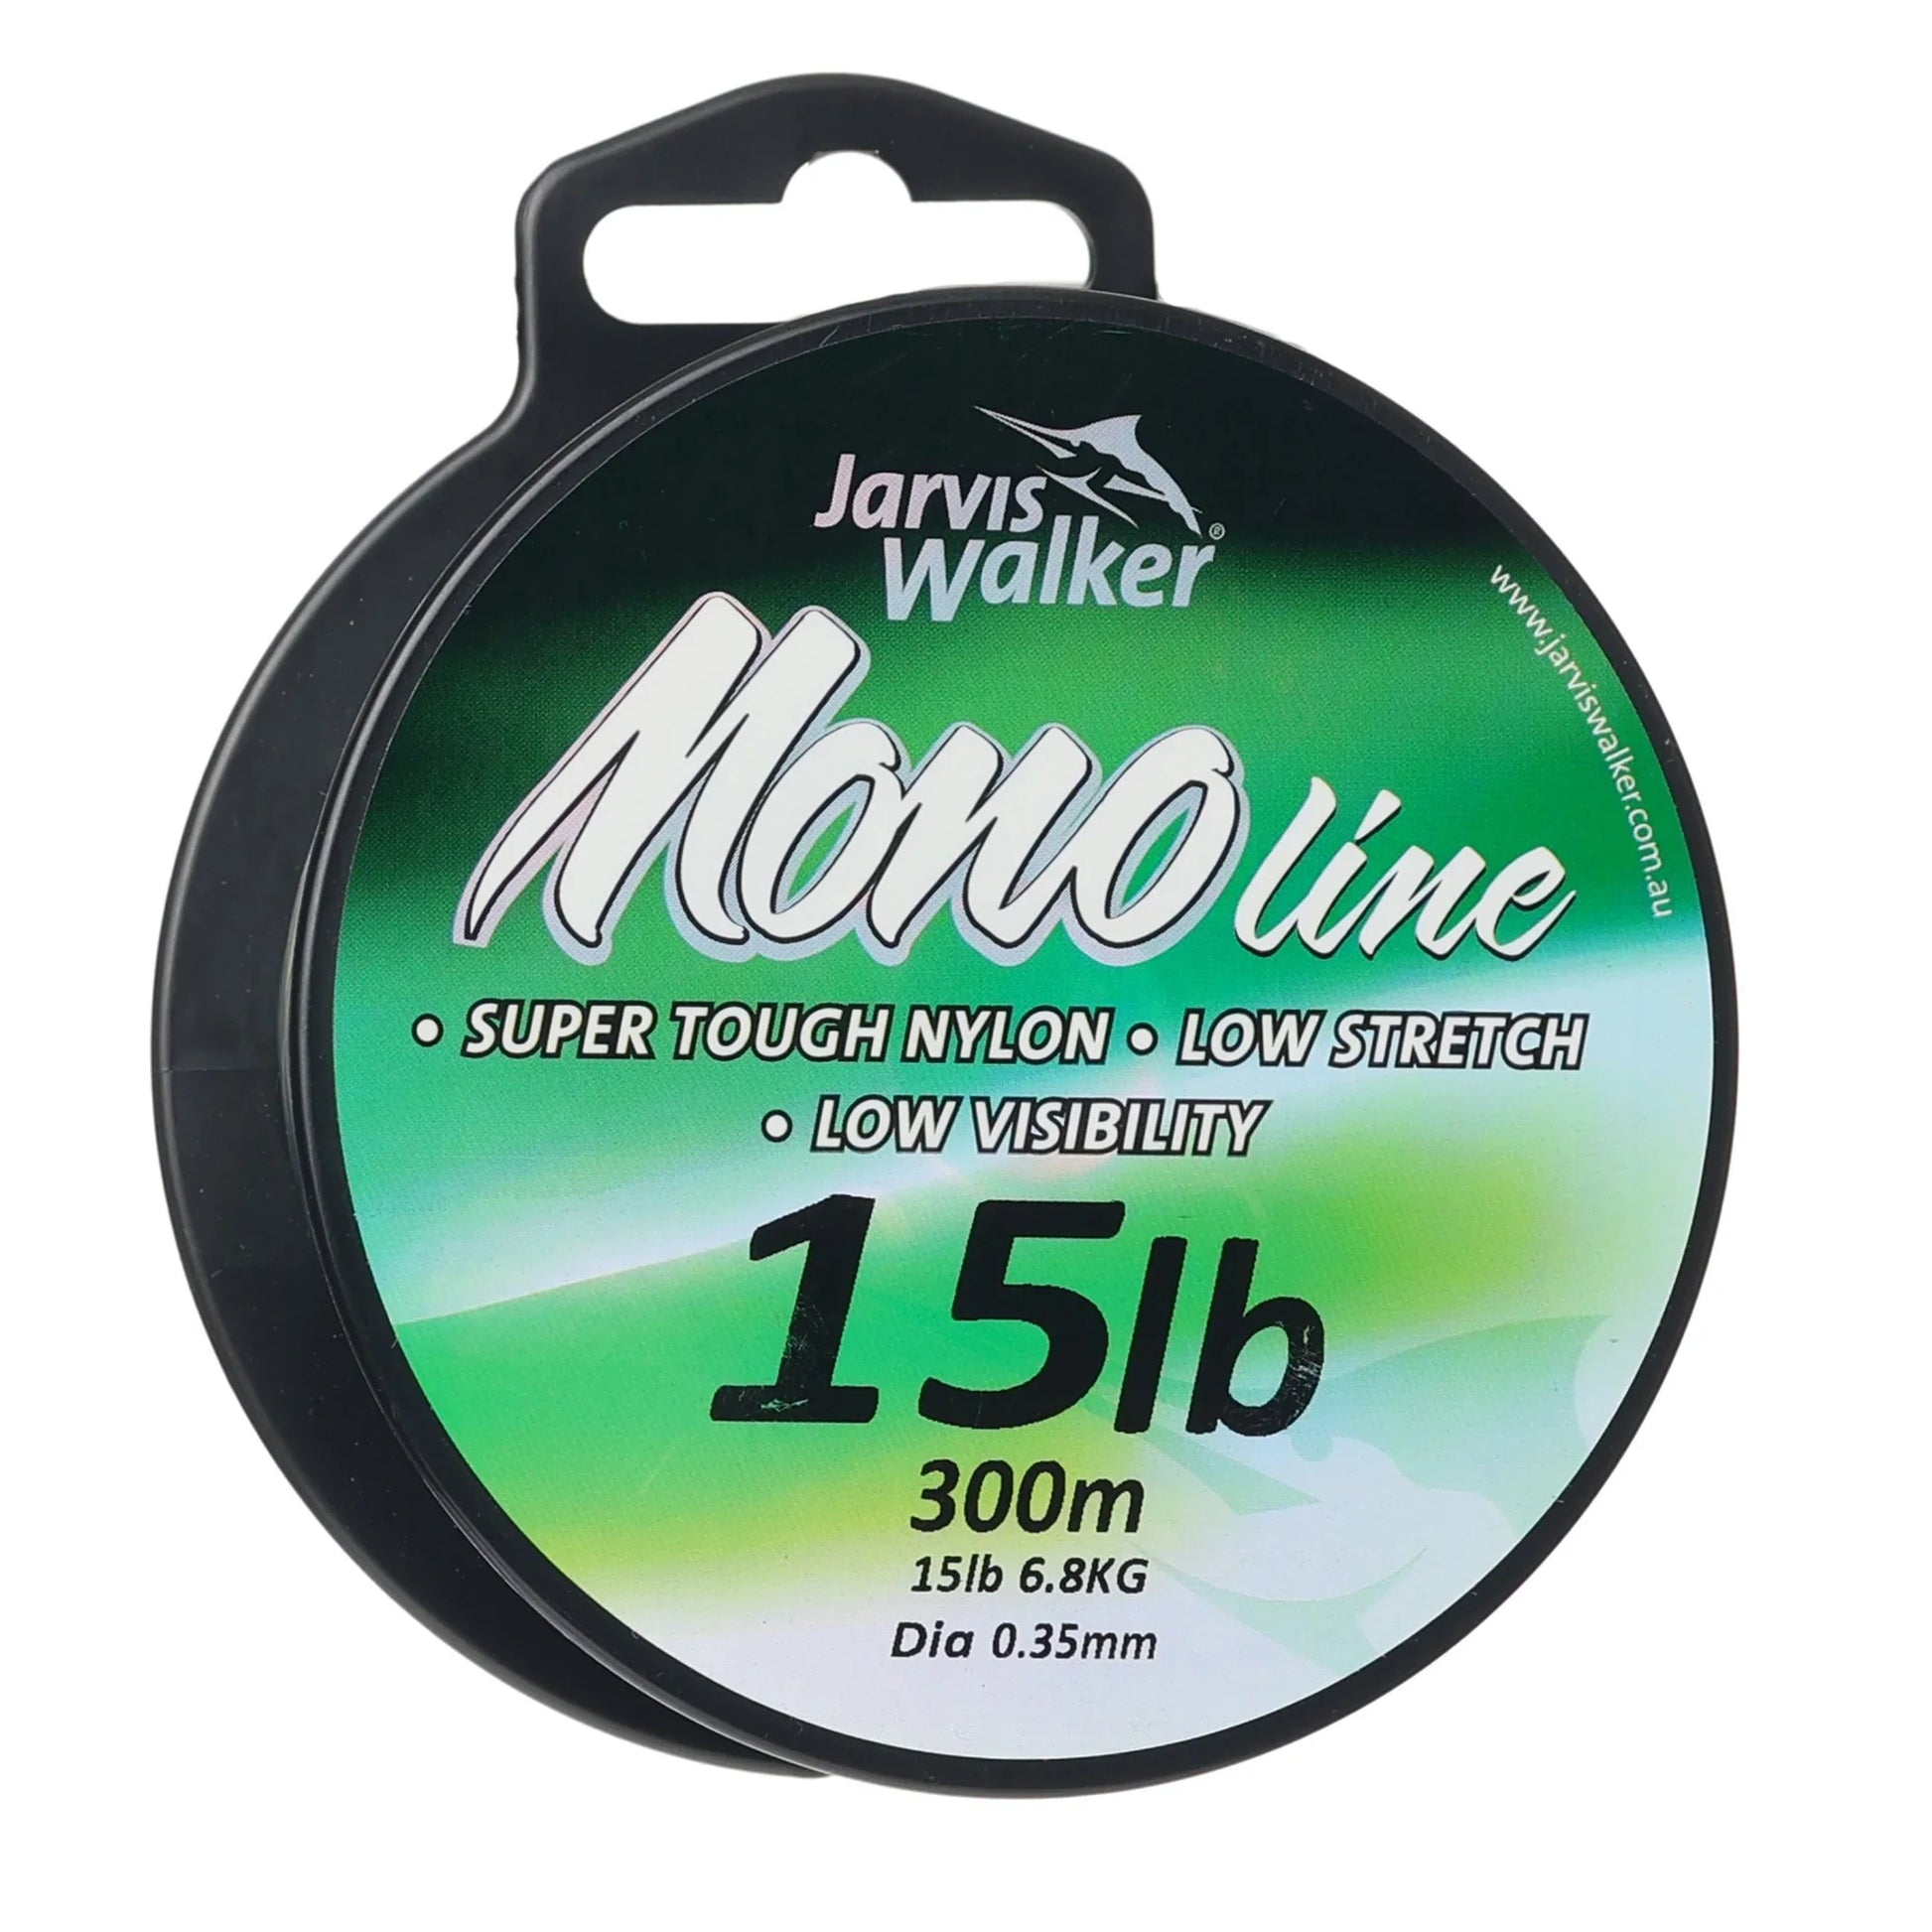 Jarvis Walker Monofilament Green Fishing Line 300m| 6LB - 30LB | 300M